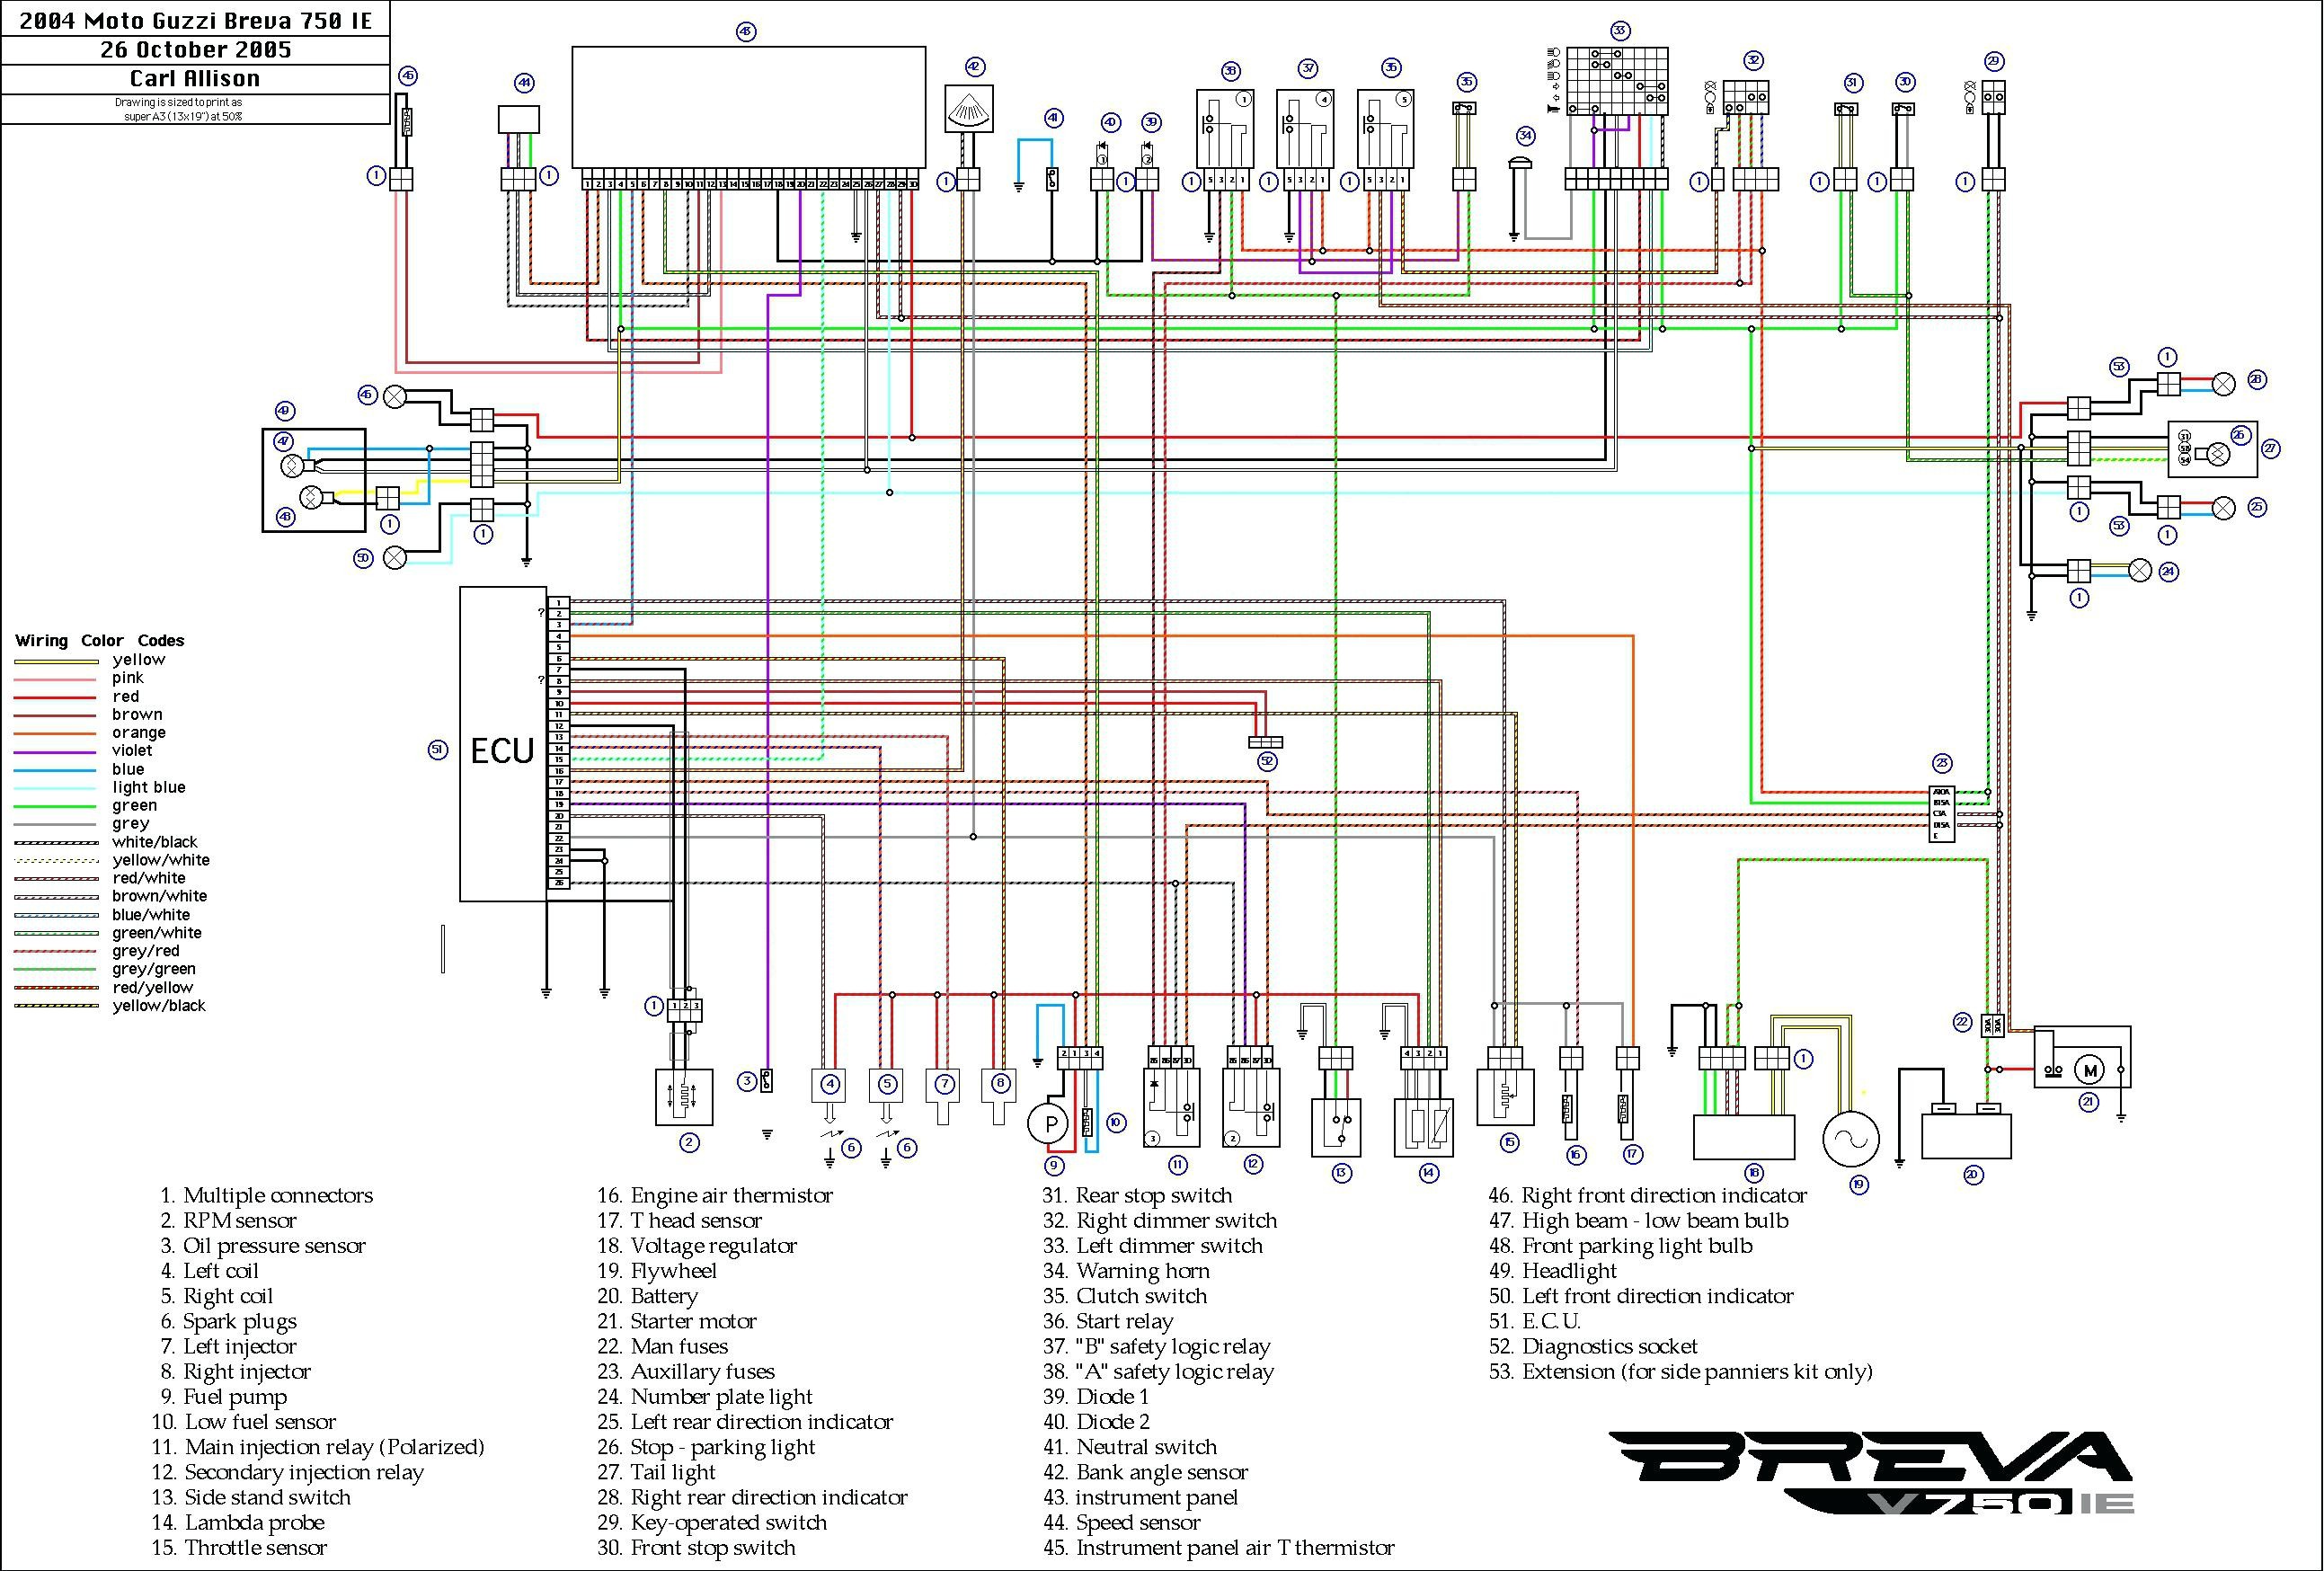 2005 chrysler pacifica engine diagram